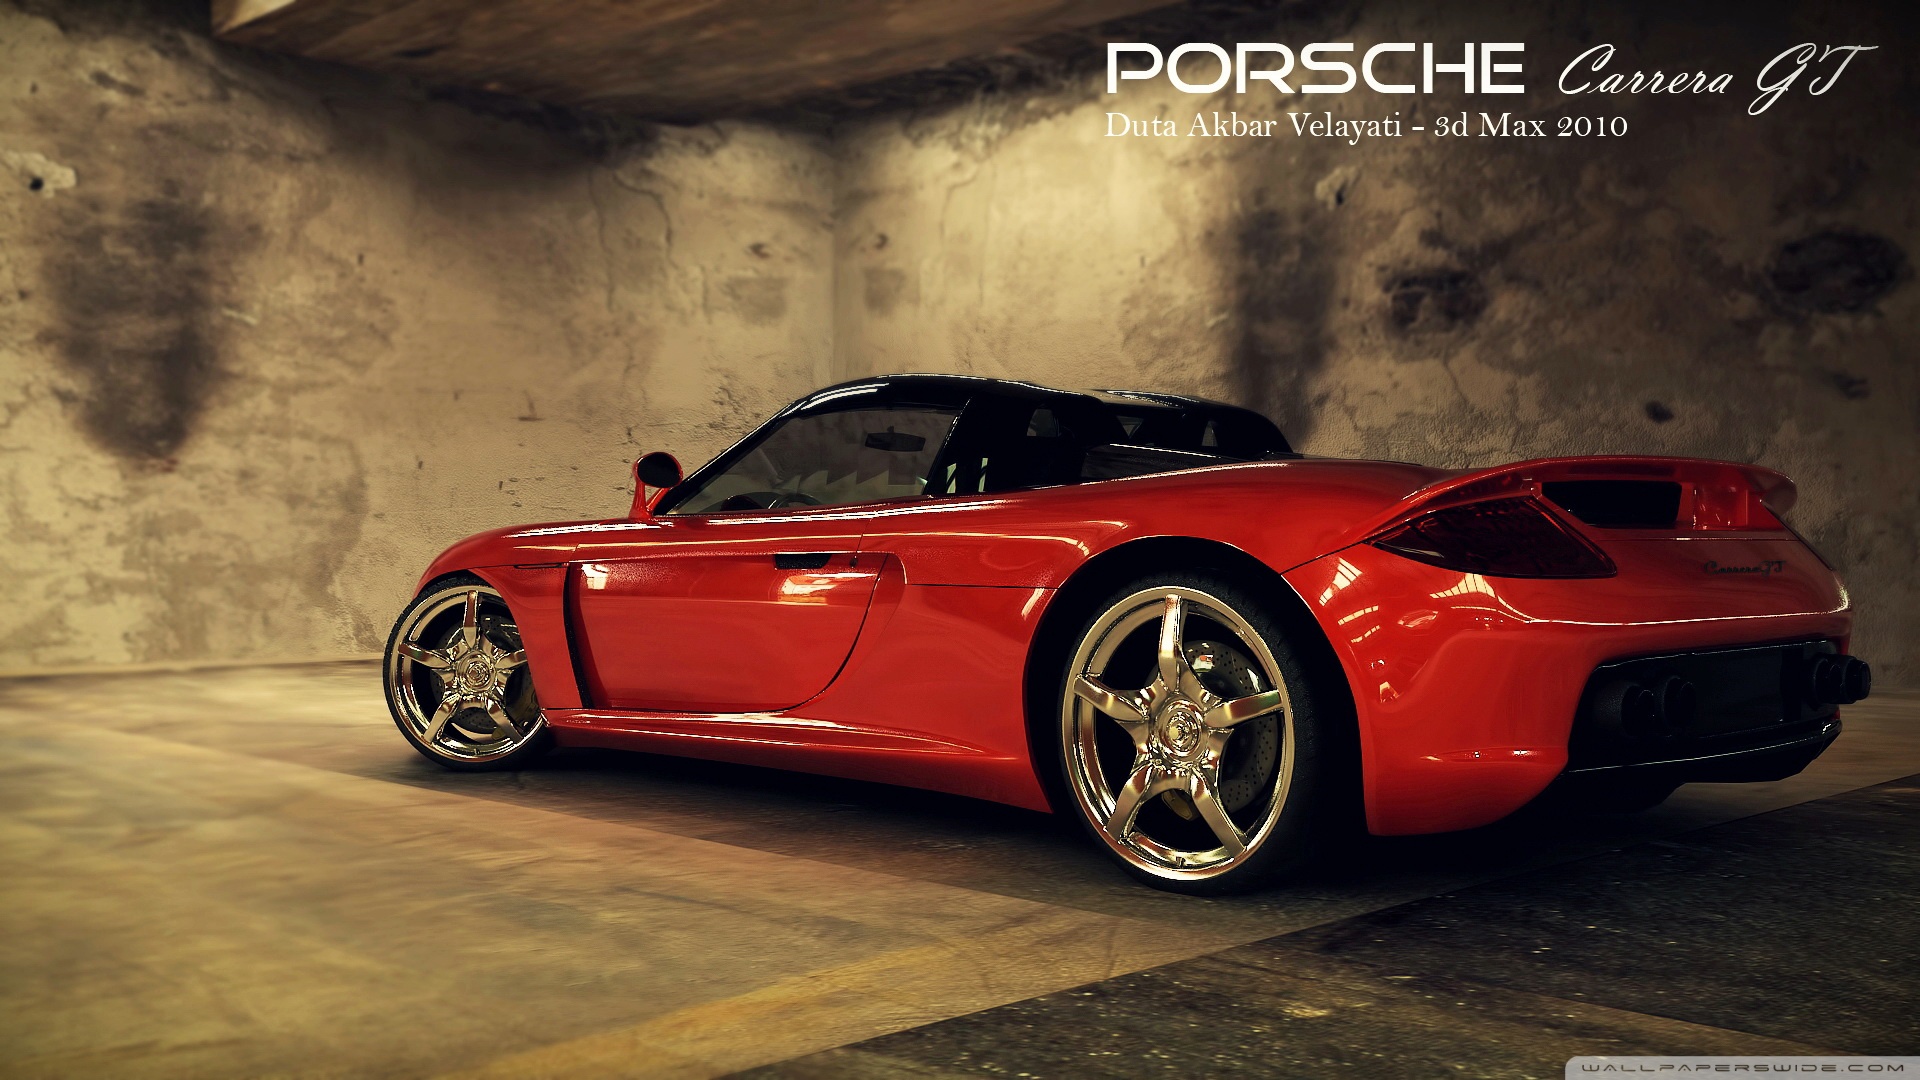 Porsche Carrera Gt Wallpaper And Background Image